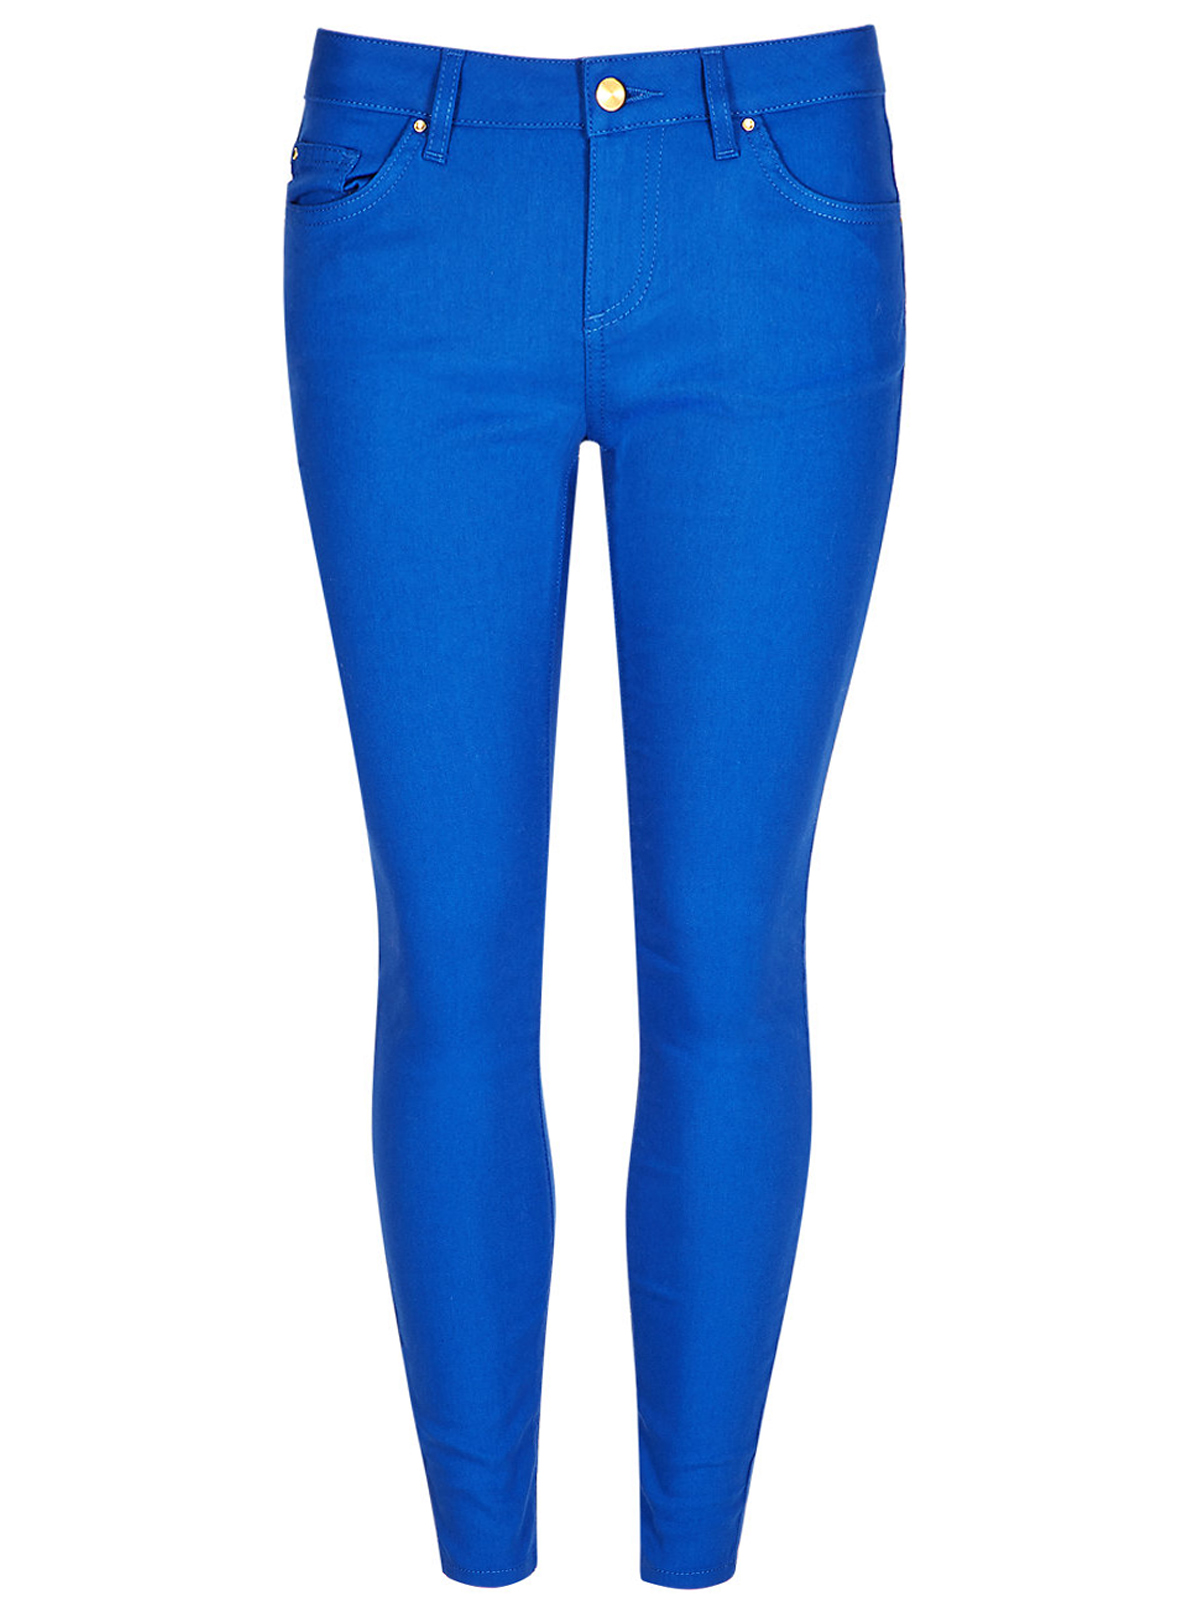 Marks and Spencer - - M&5 COBALT Supersoft Skinny Jeans - Size 12